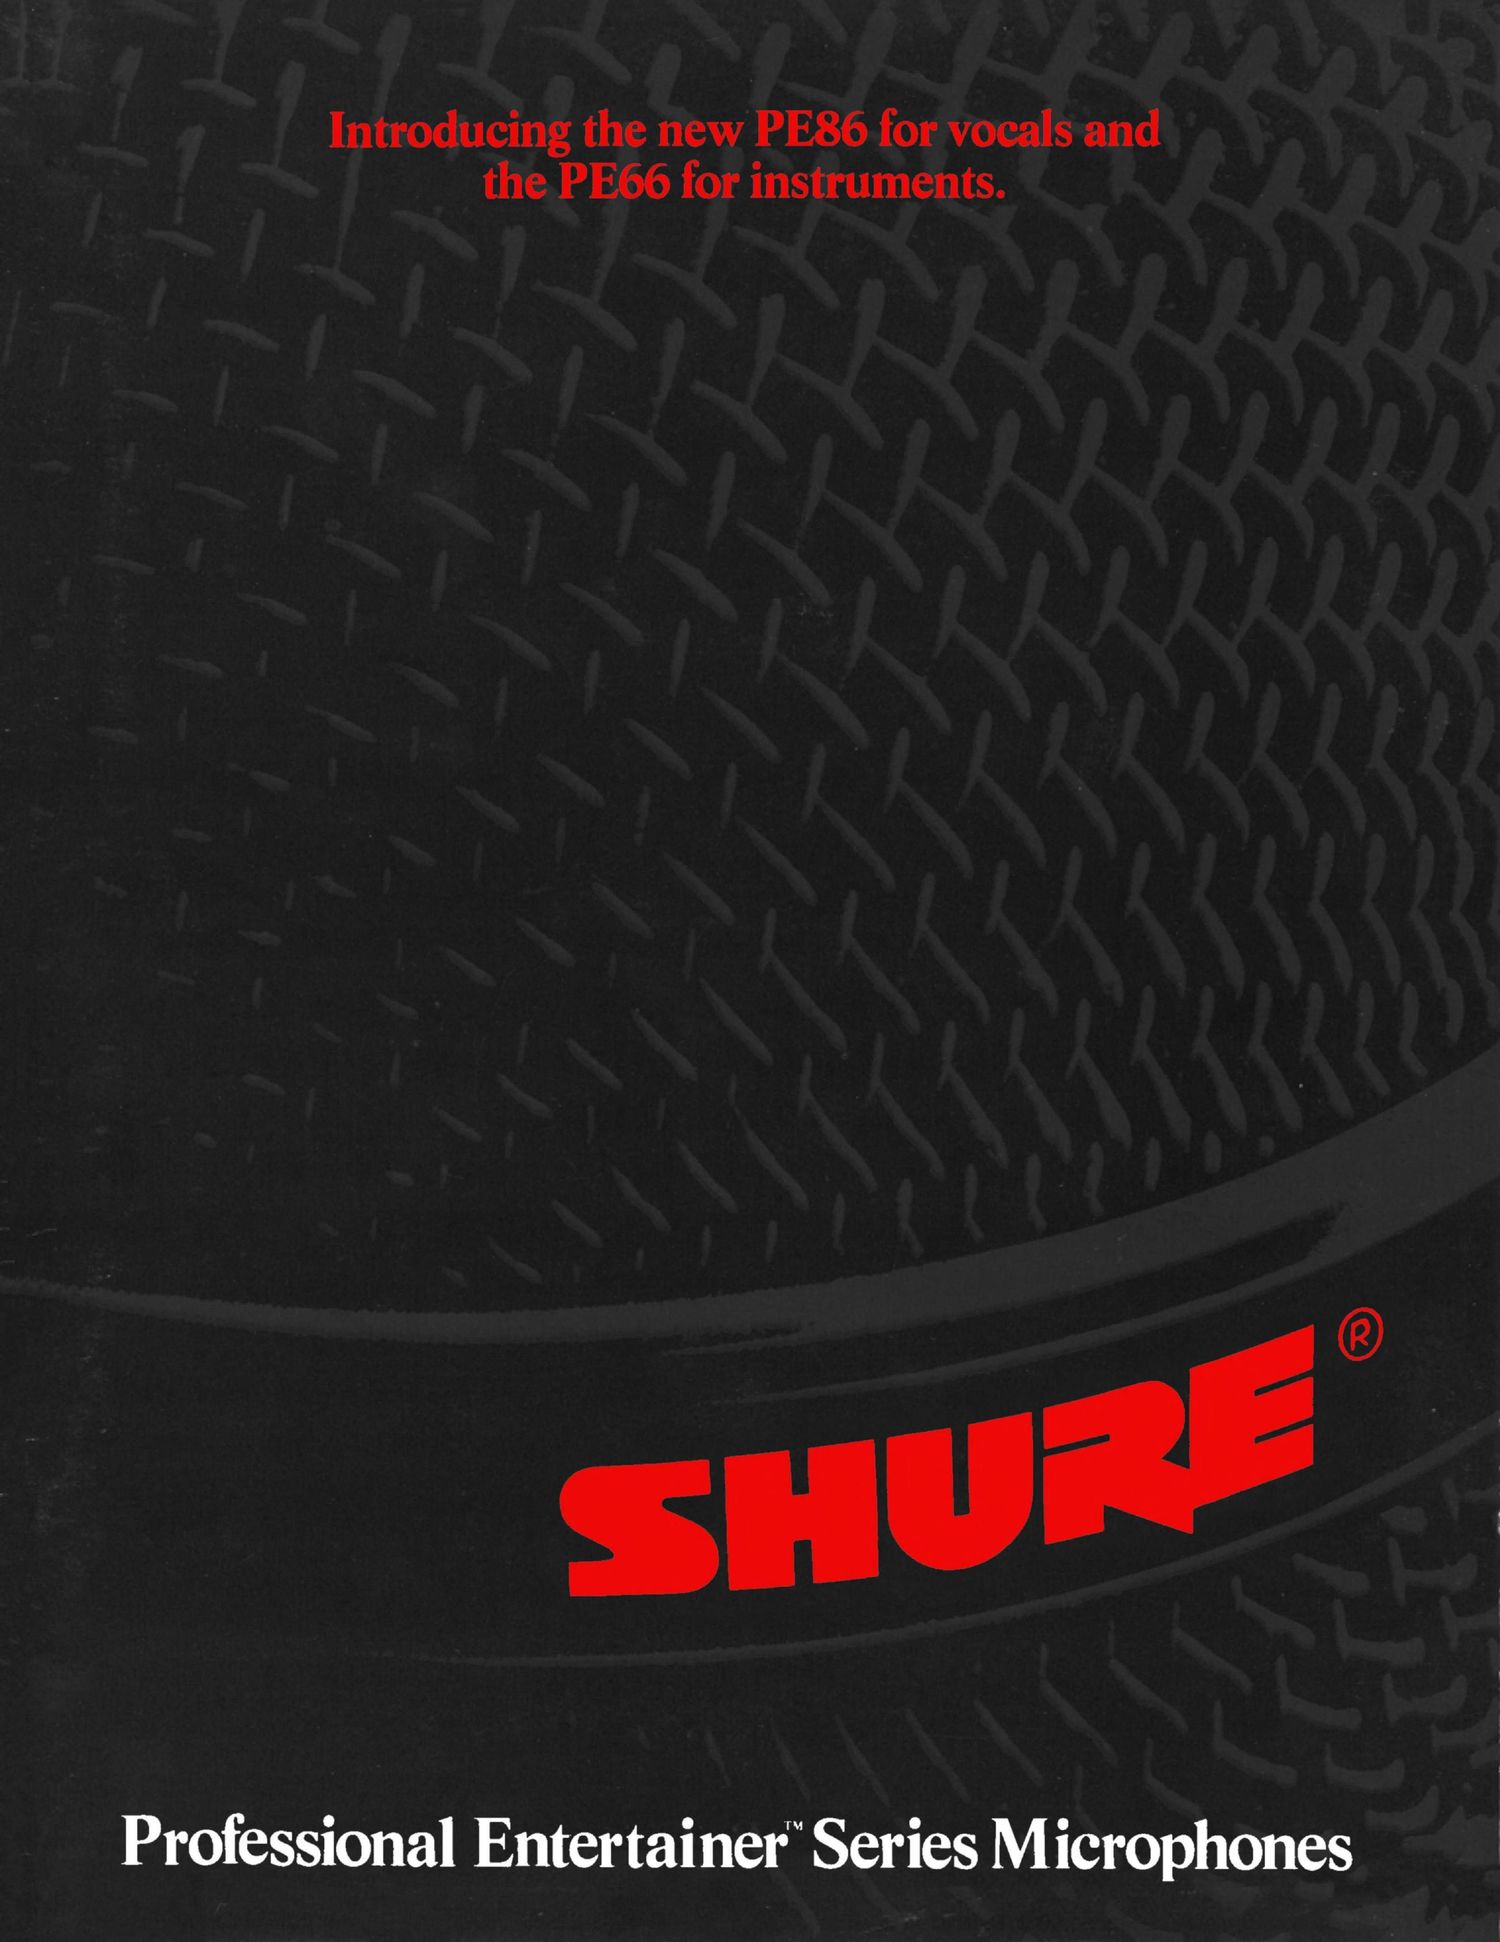 shure 1983 catalogue pe professional entertainer series microphones